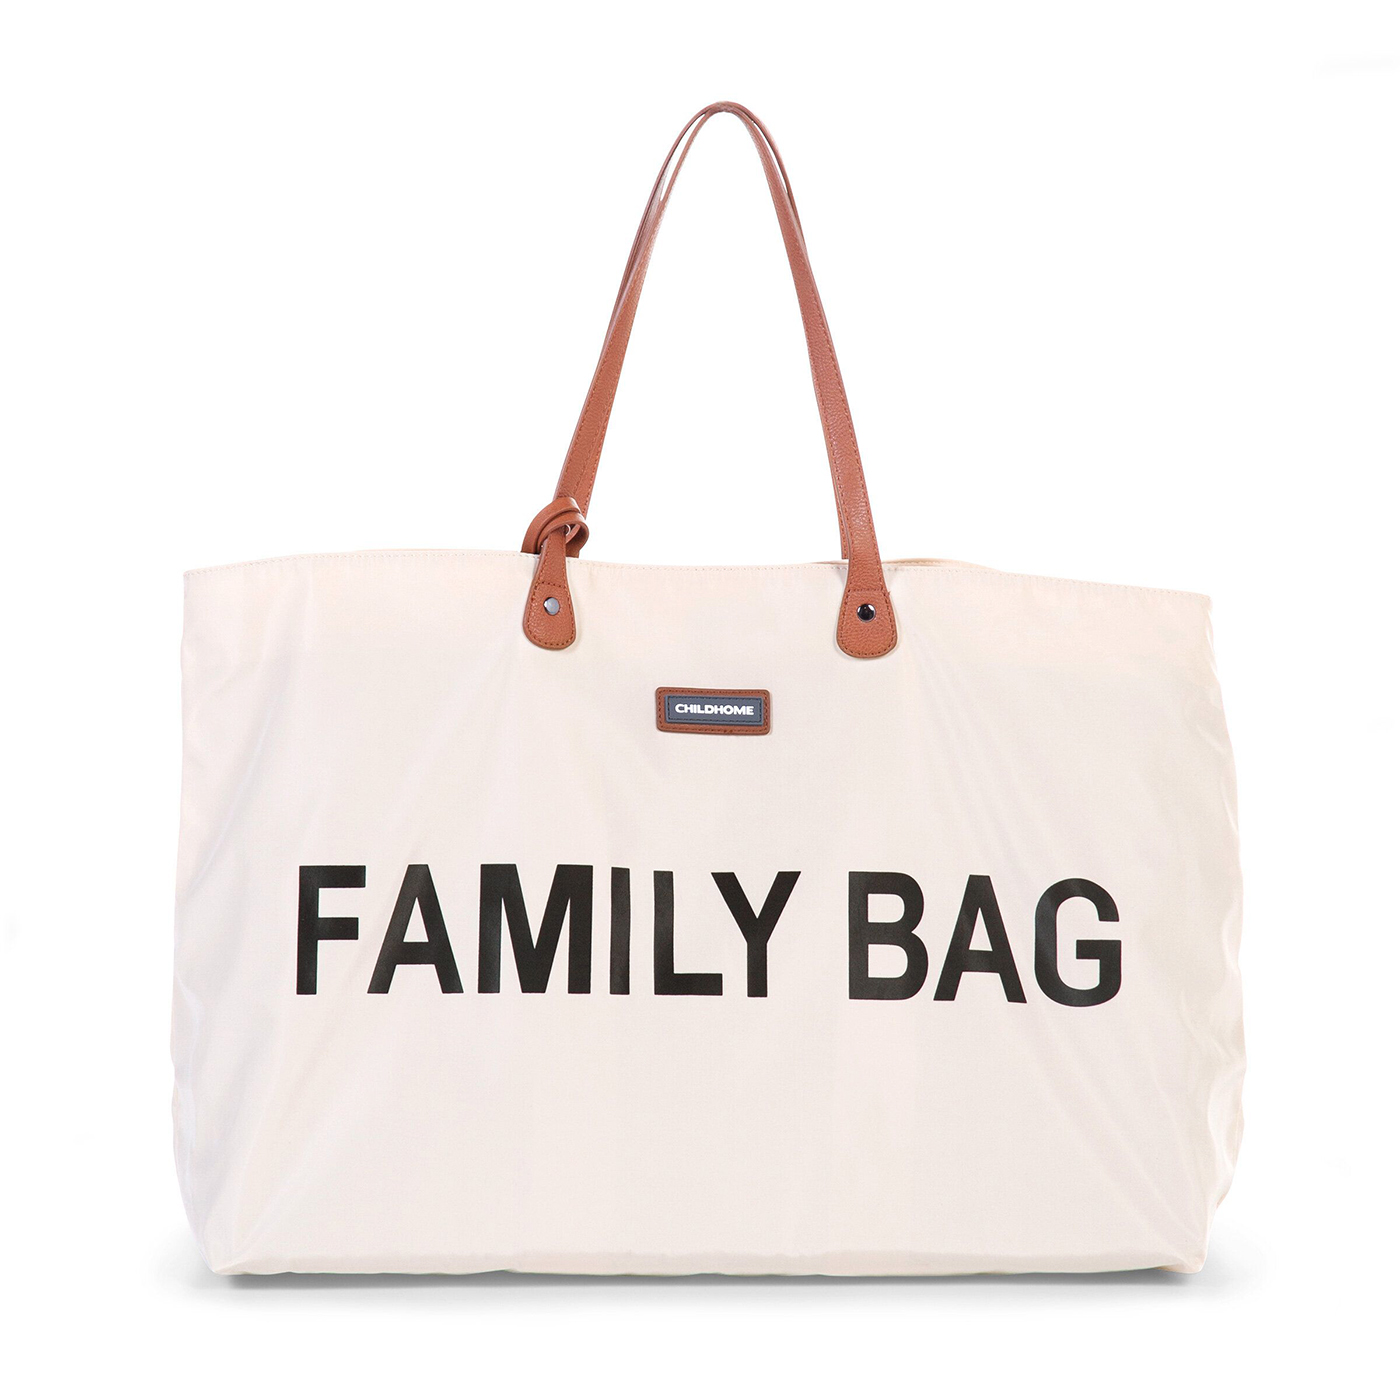  Childhome Family Bag Anne Bebek Çantası | Krem